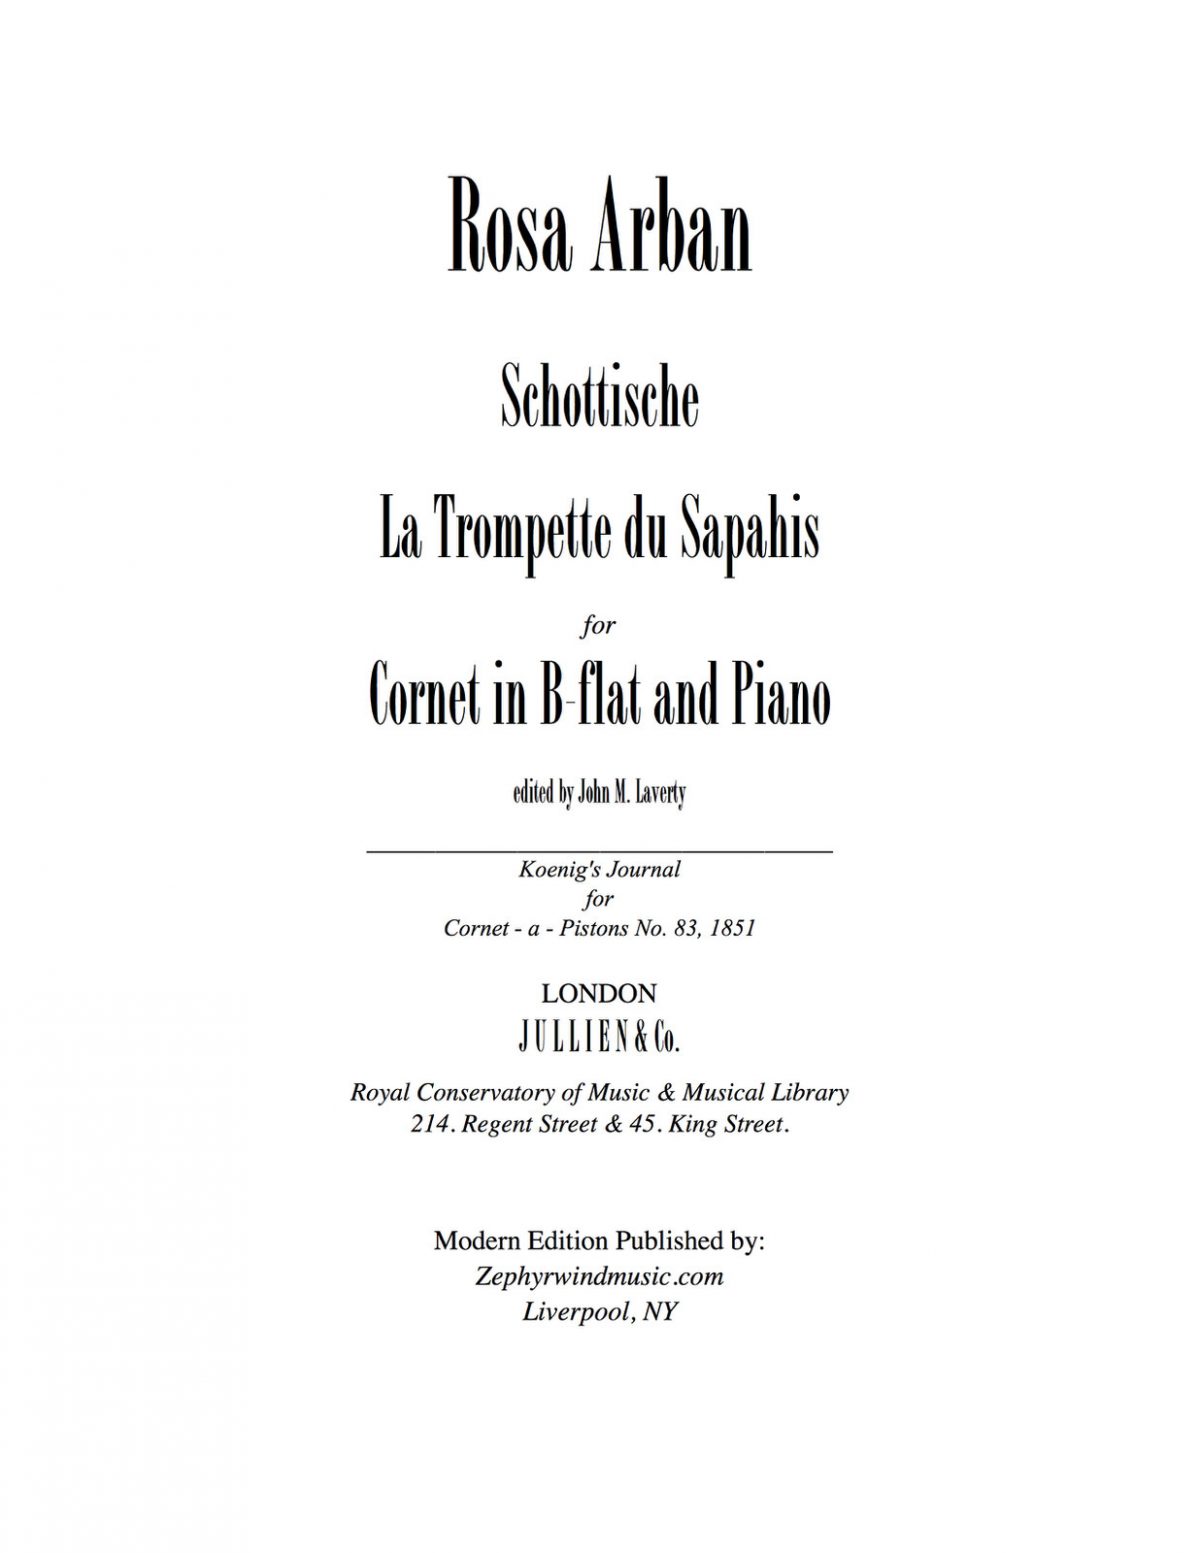 Arban, Rosa Schottishe La Trompette du Spahis